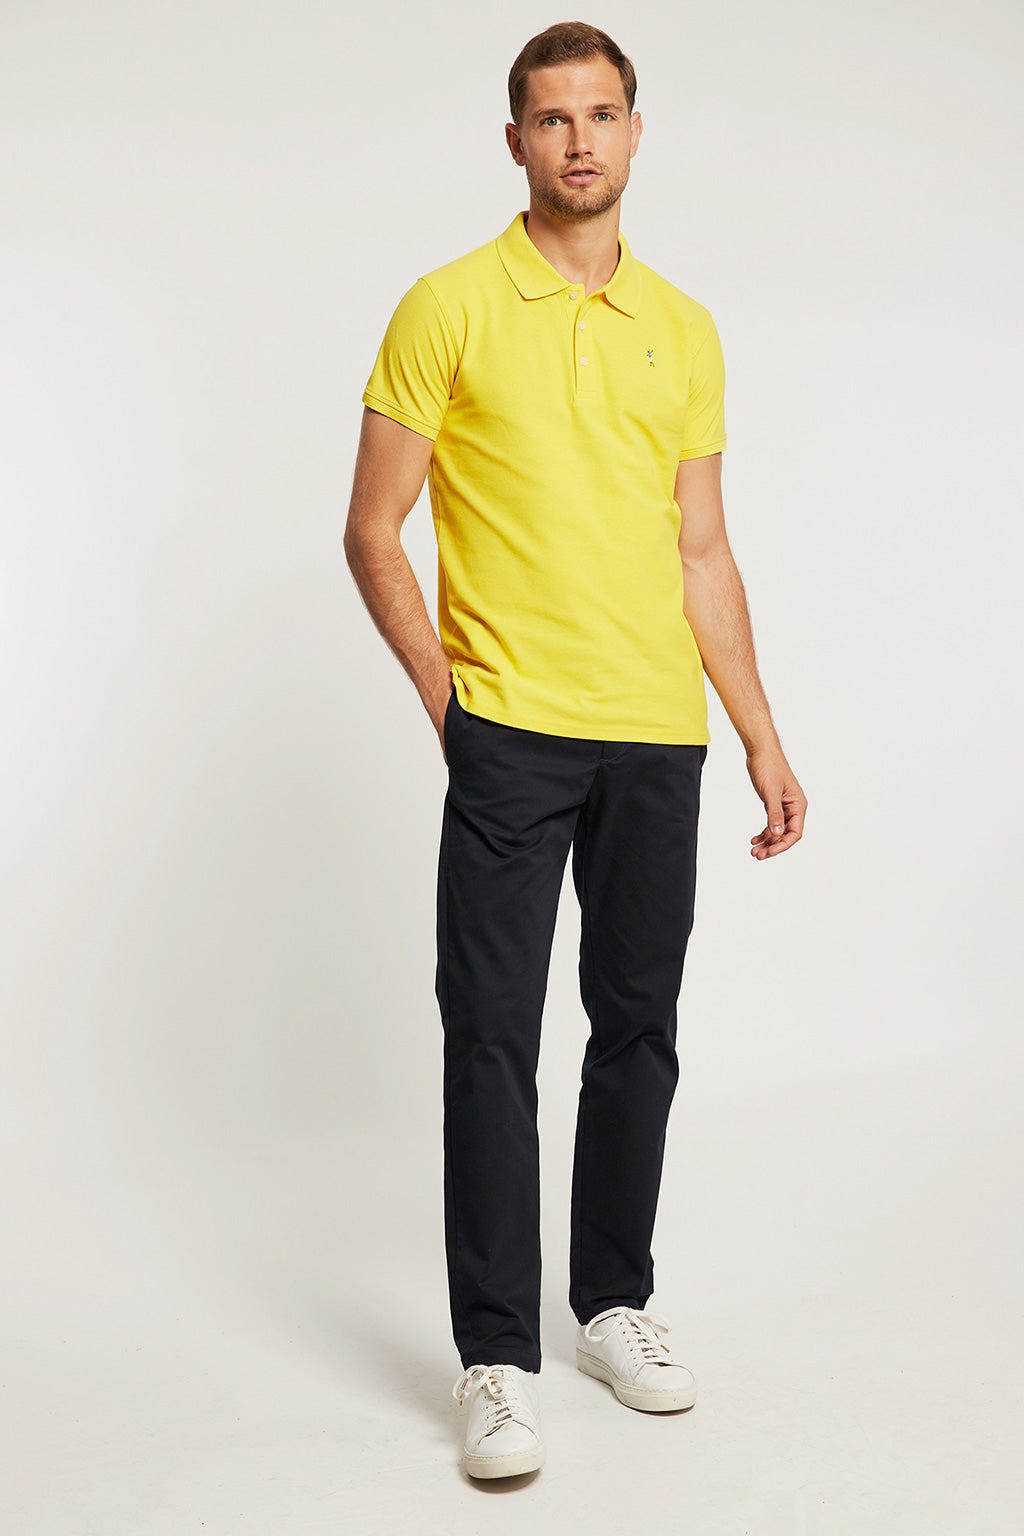 yellow polo shirt with white collar